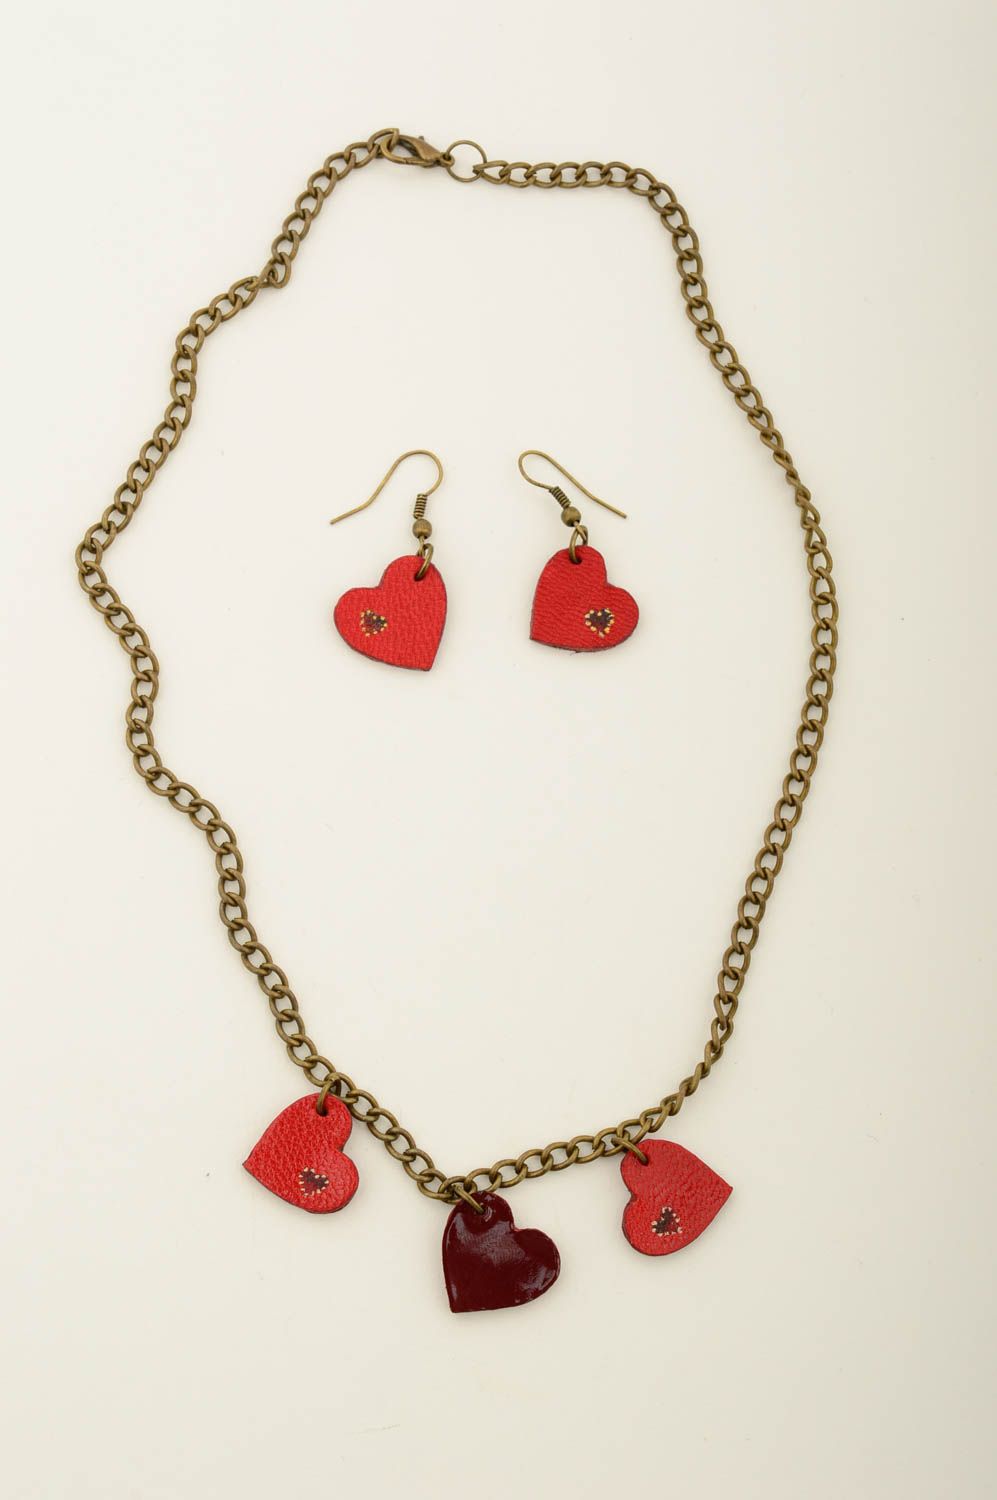 Stylish handmade leather earrings necklace design costume jewelry set ideas photo 3